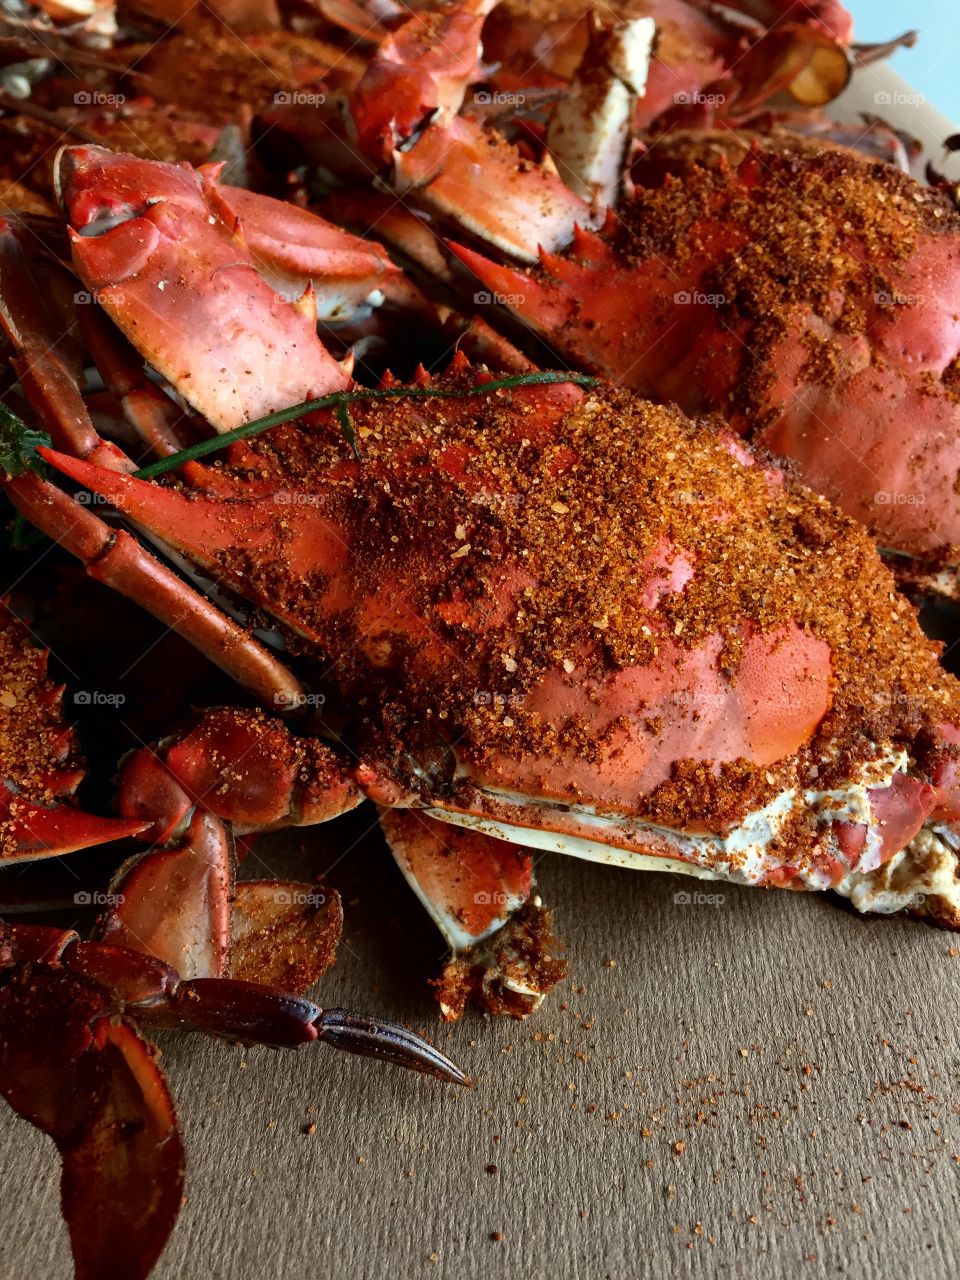 Delicious crabs. Steamed crabs are healthy